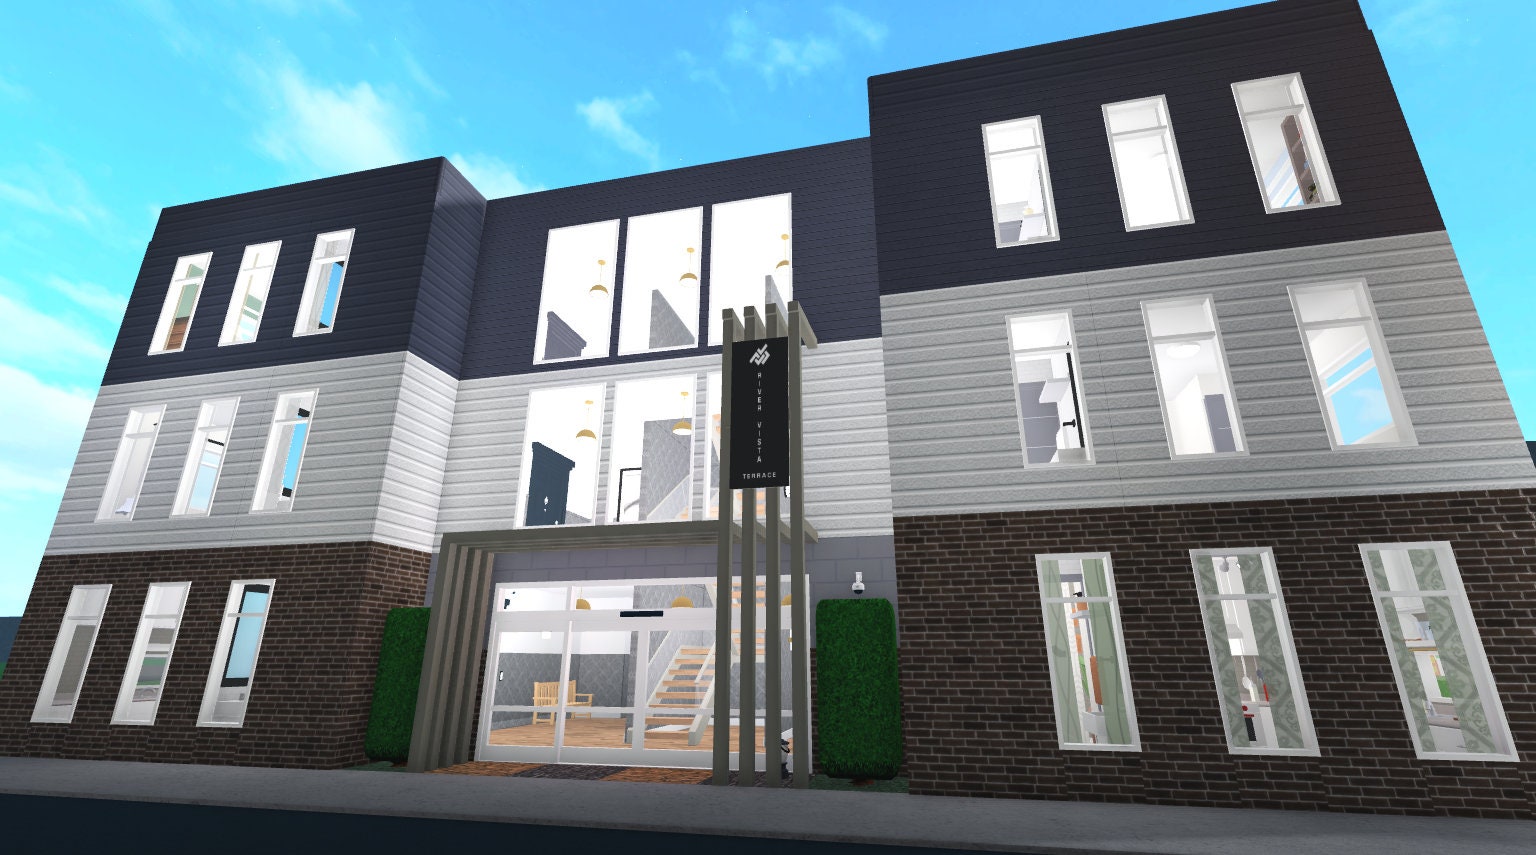 Bloxburg Build Custom Apartments Roblox Custom House Layout Only